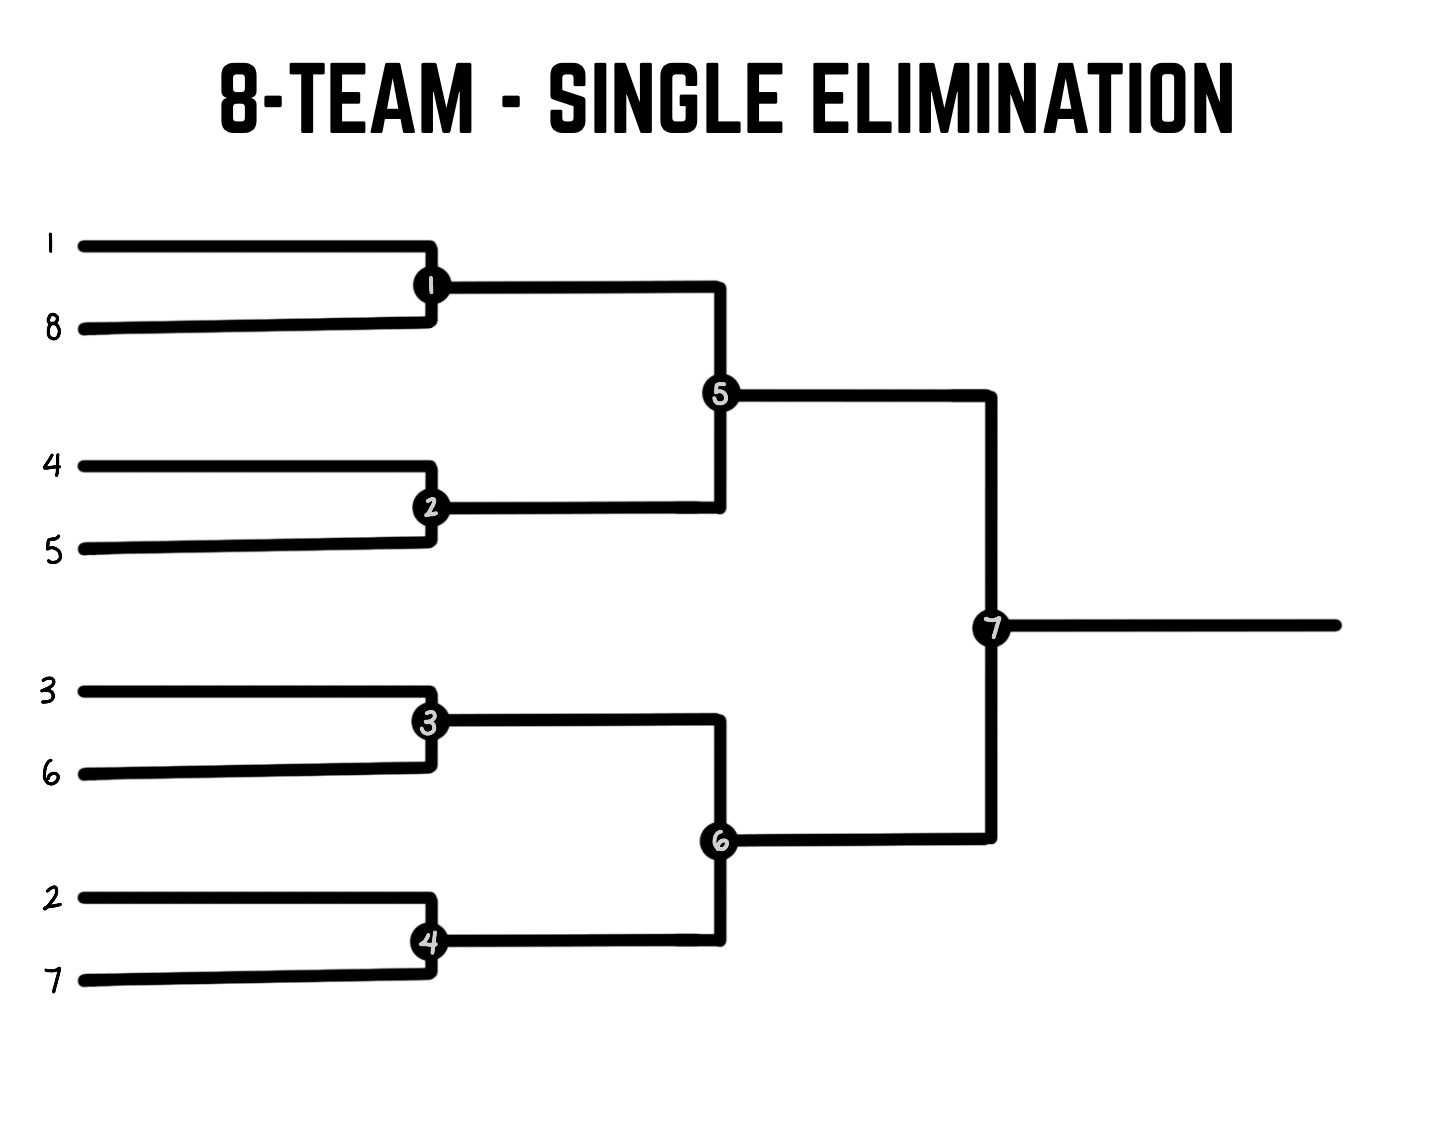 How do you set up a single elimination tournament?